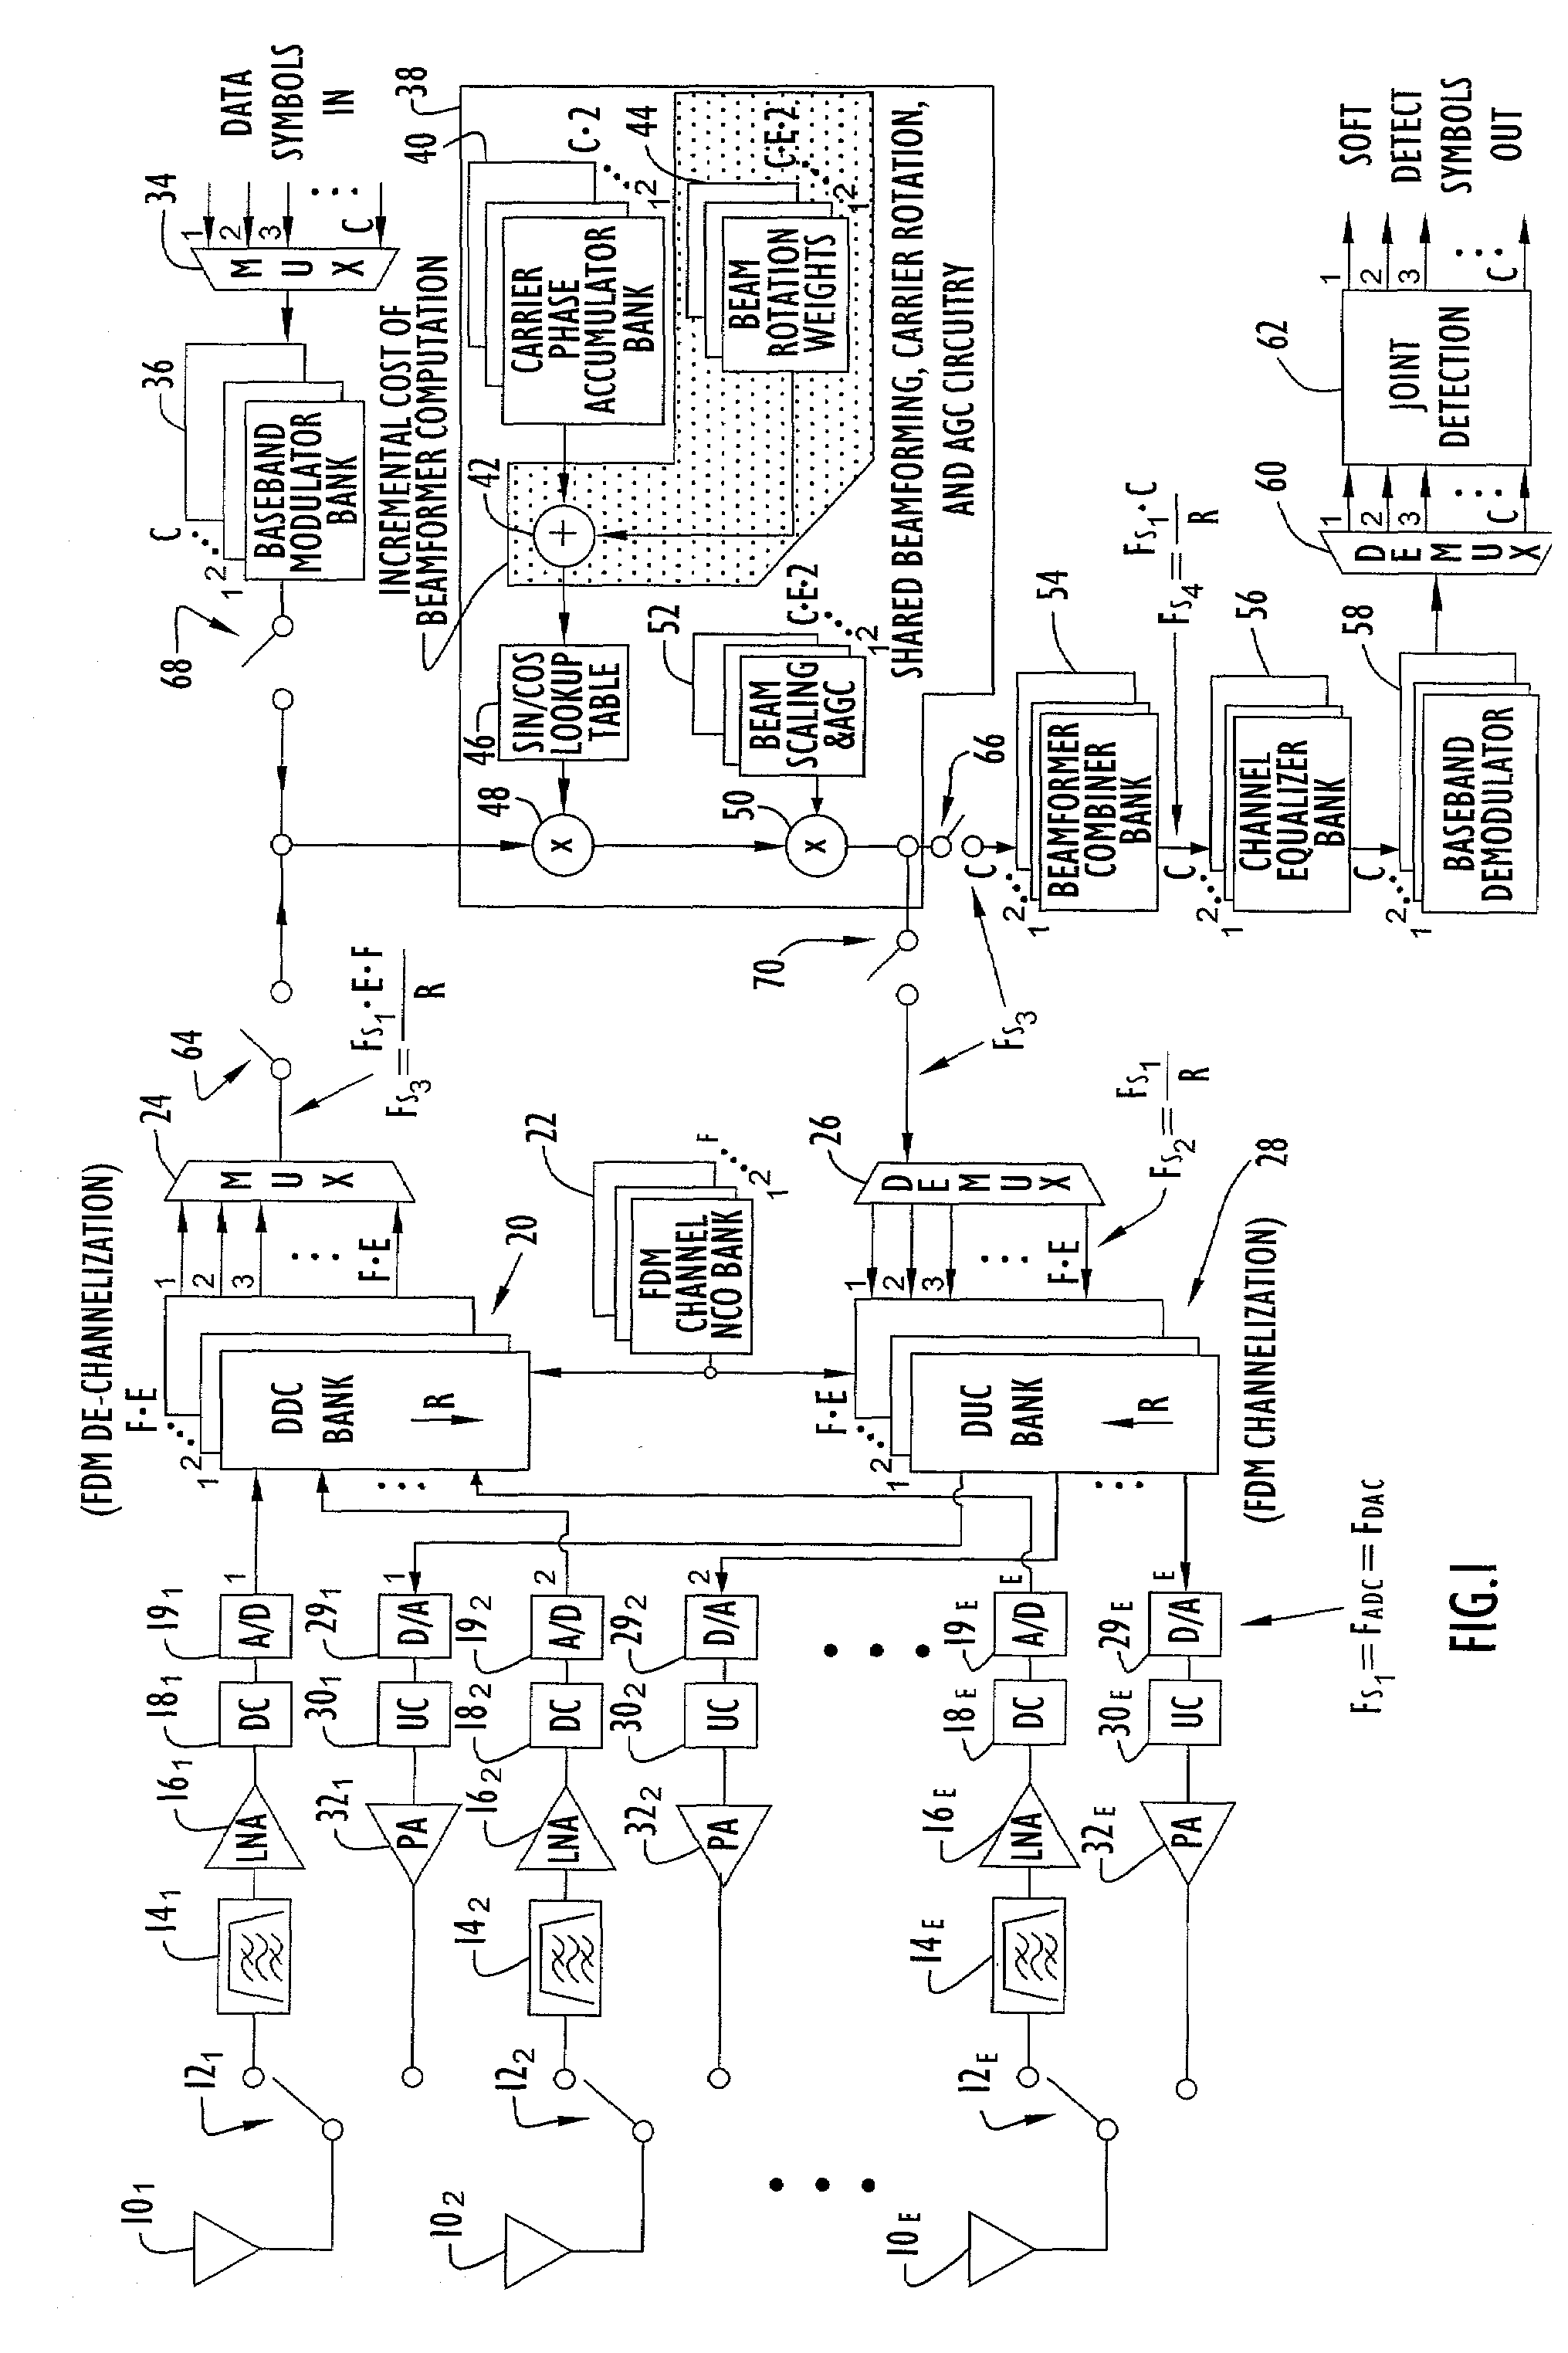 Integrated beamformer/modem architecture